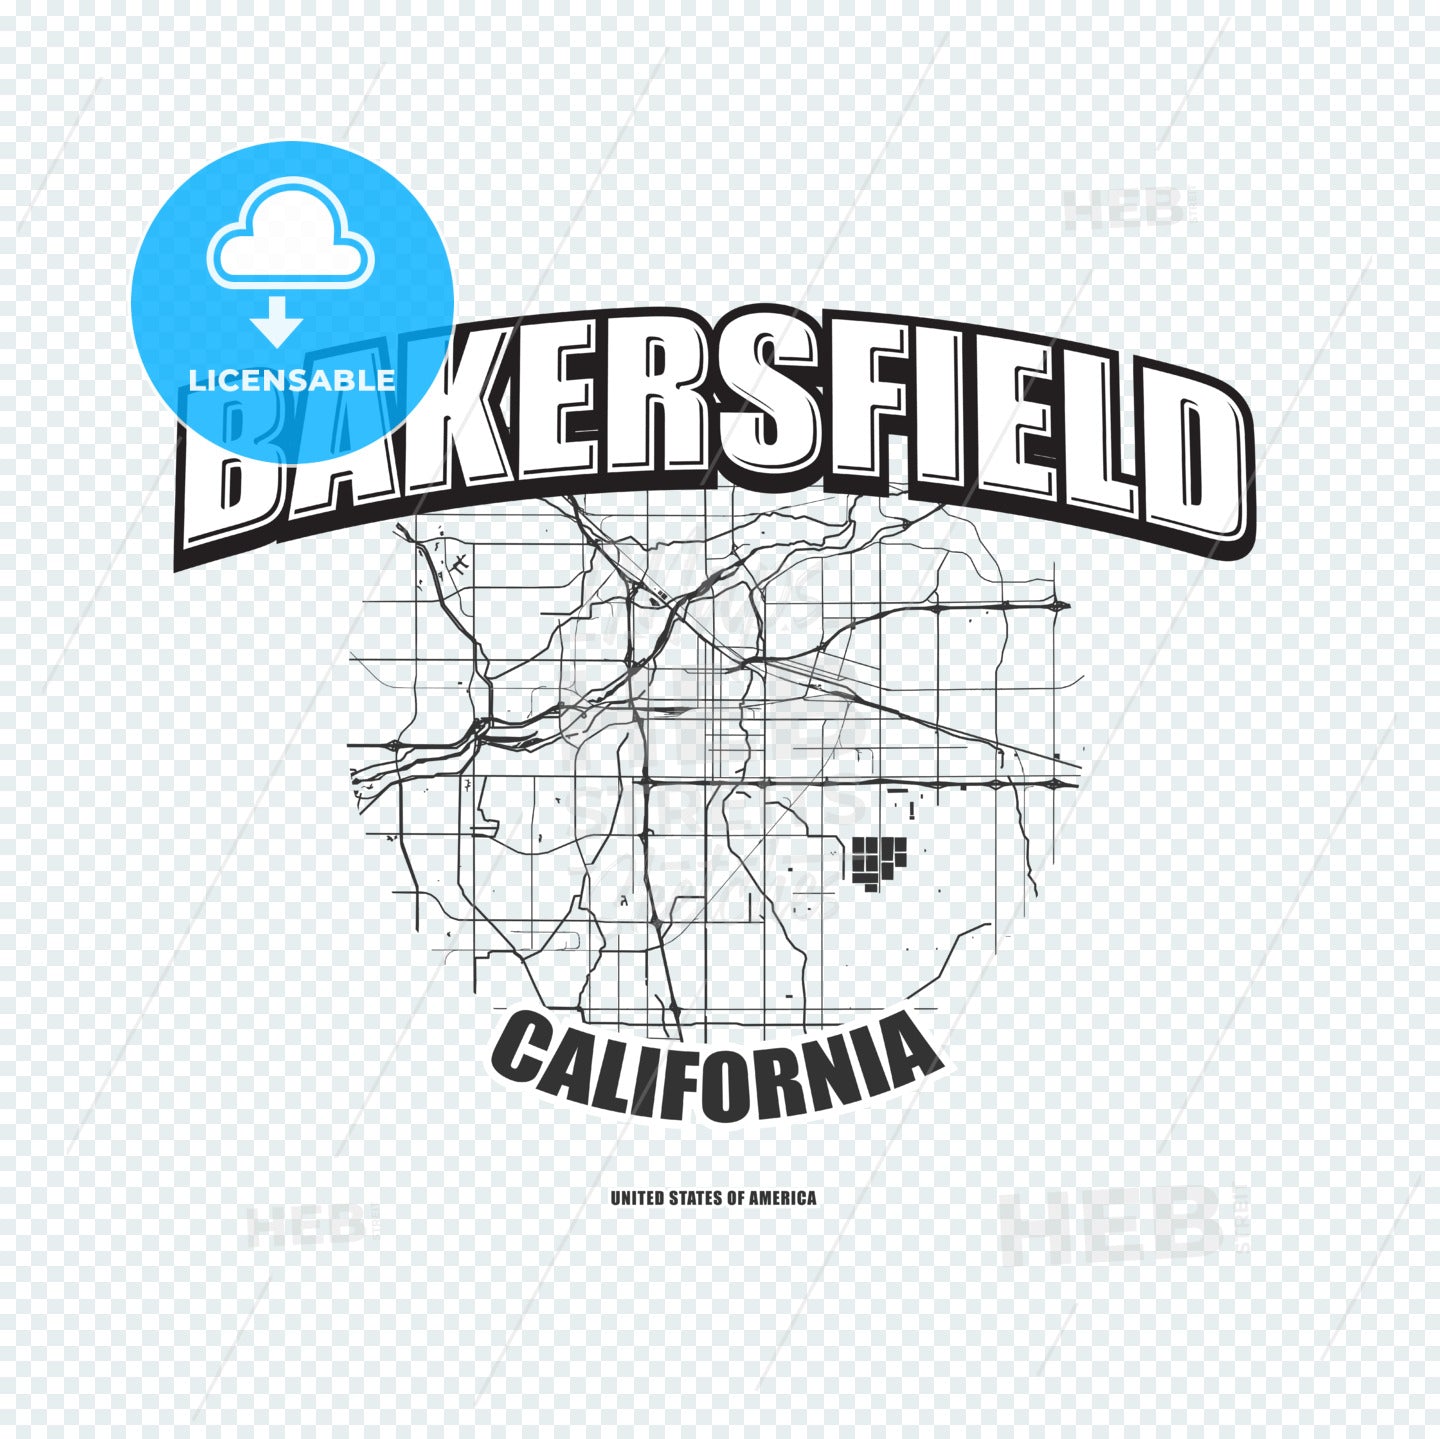 Bakersfield, California, logo artwork – instant download